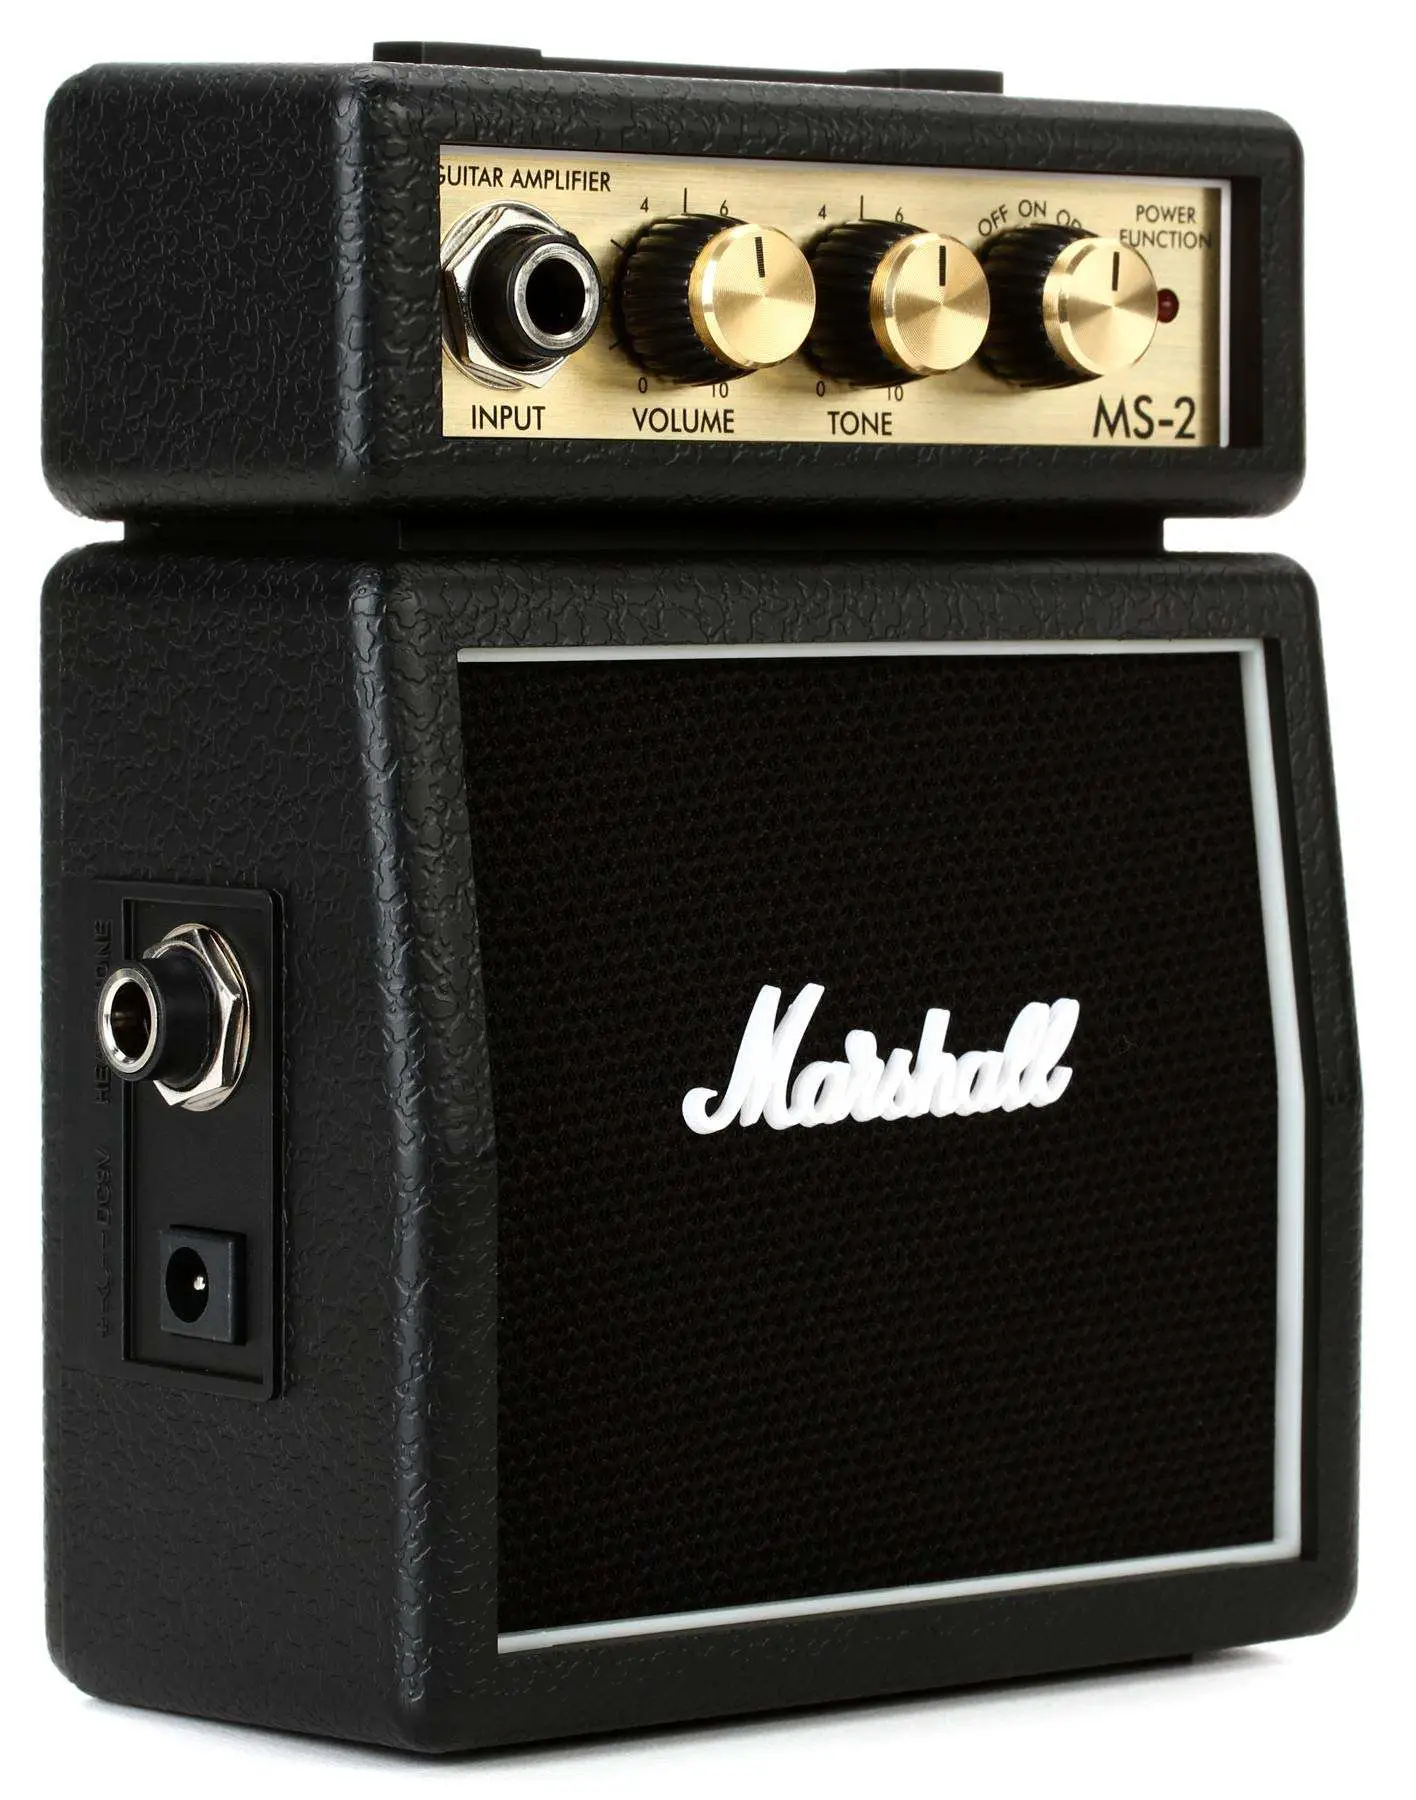 Marshall MS2 Micro Guitar Amplifier